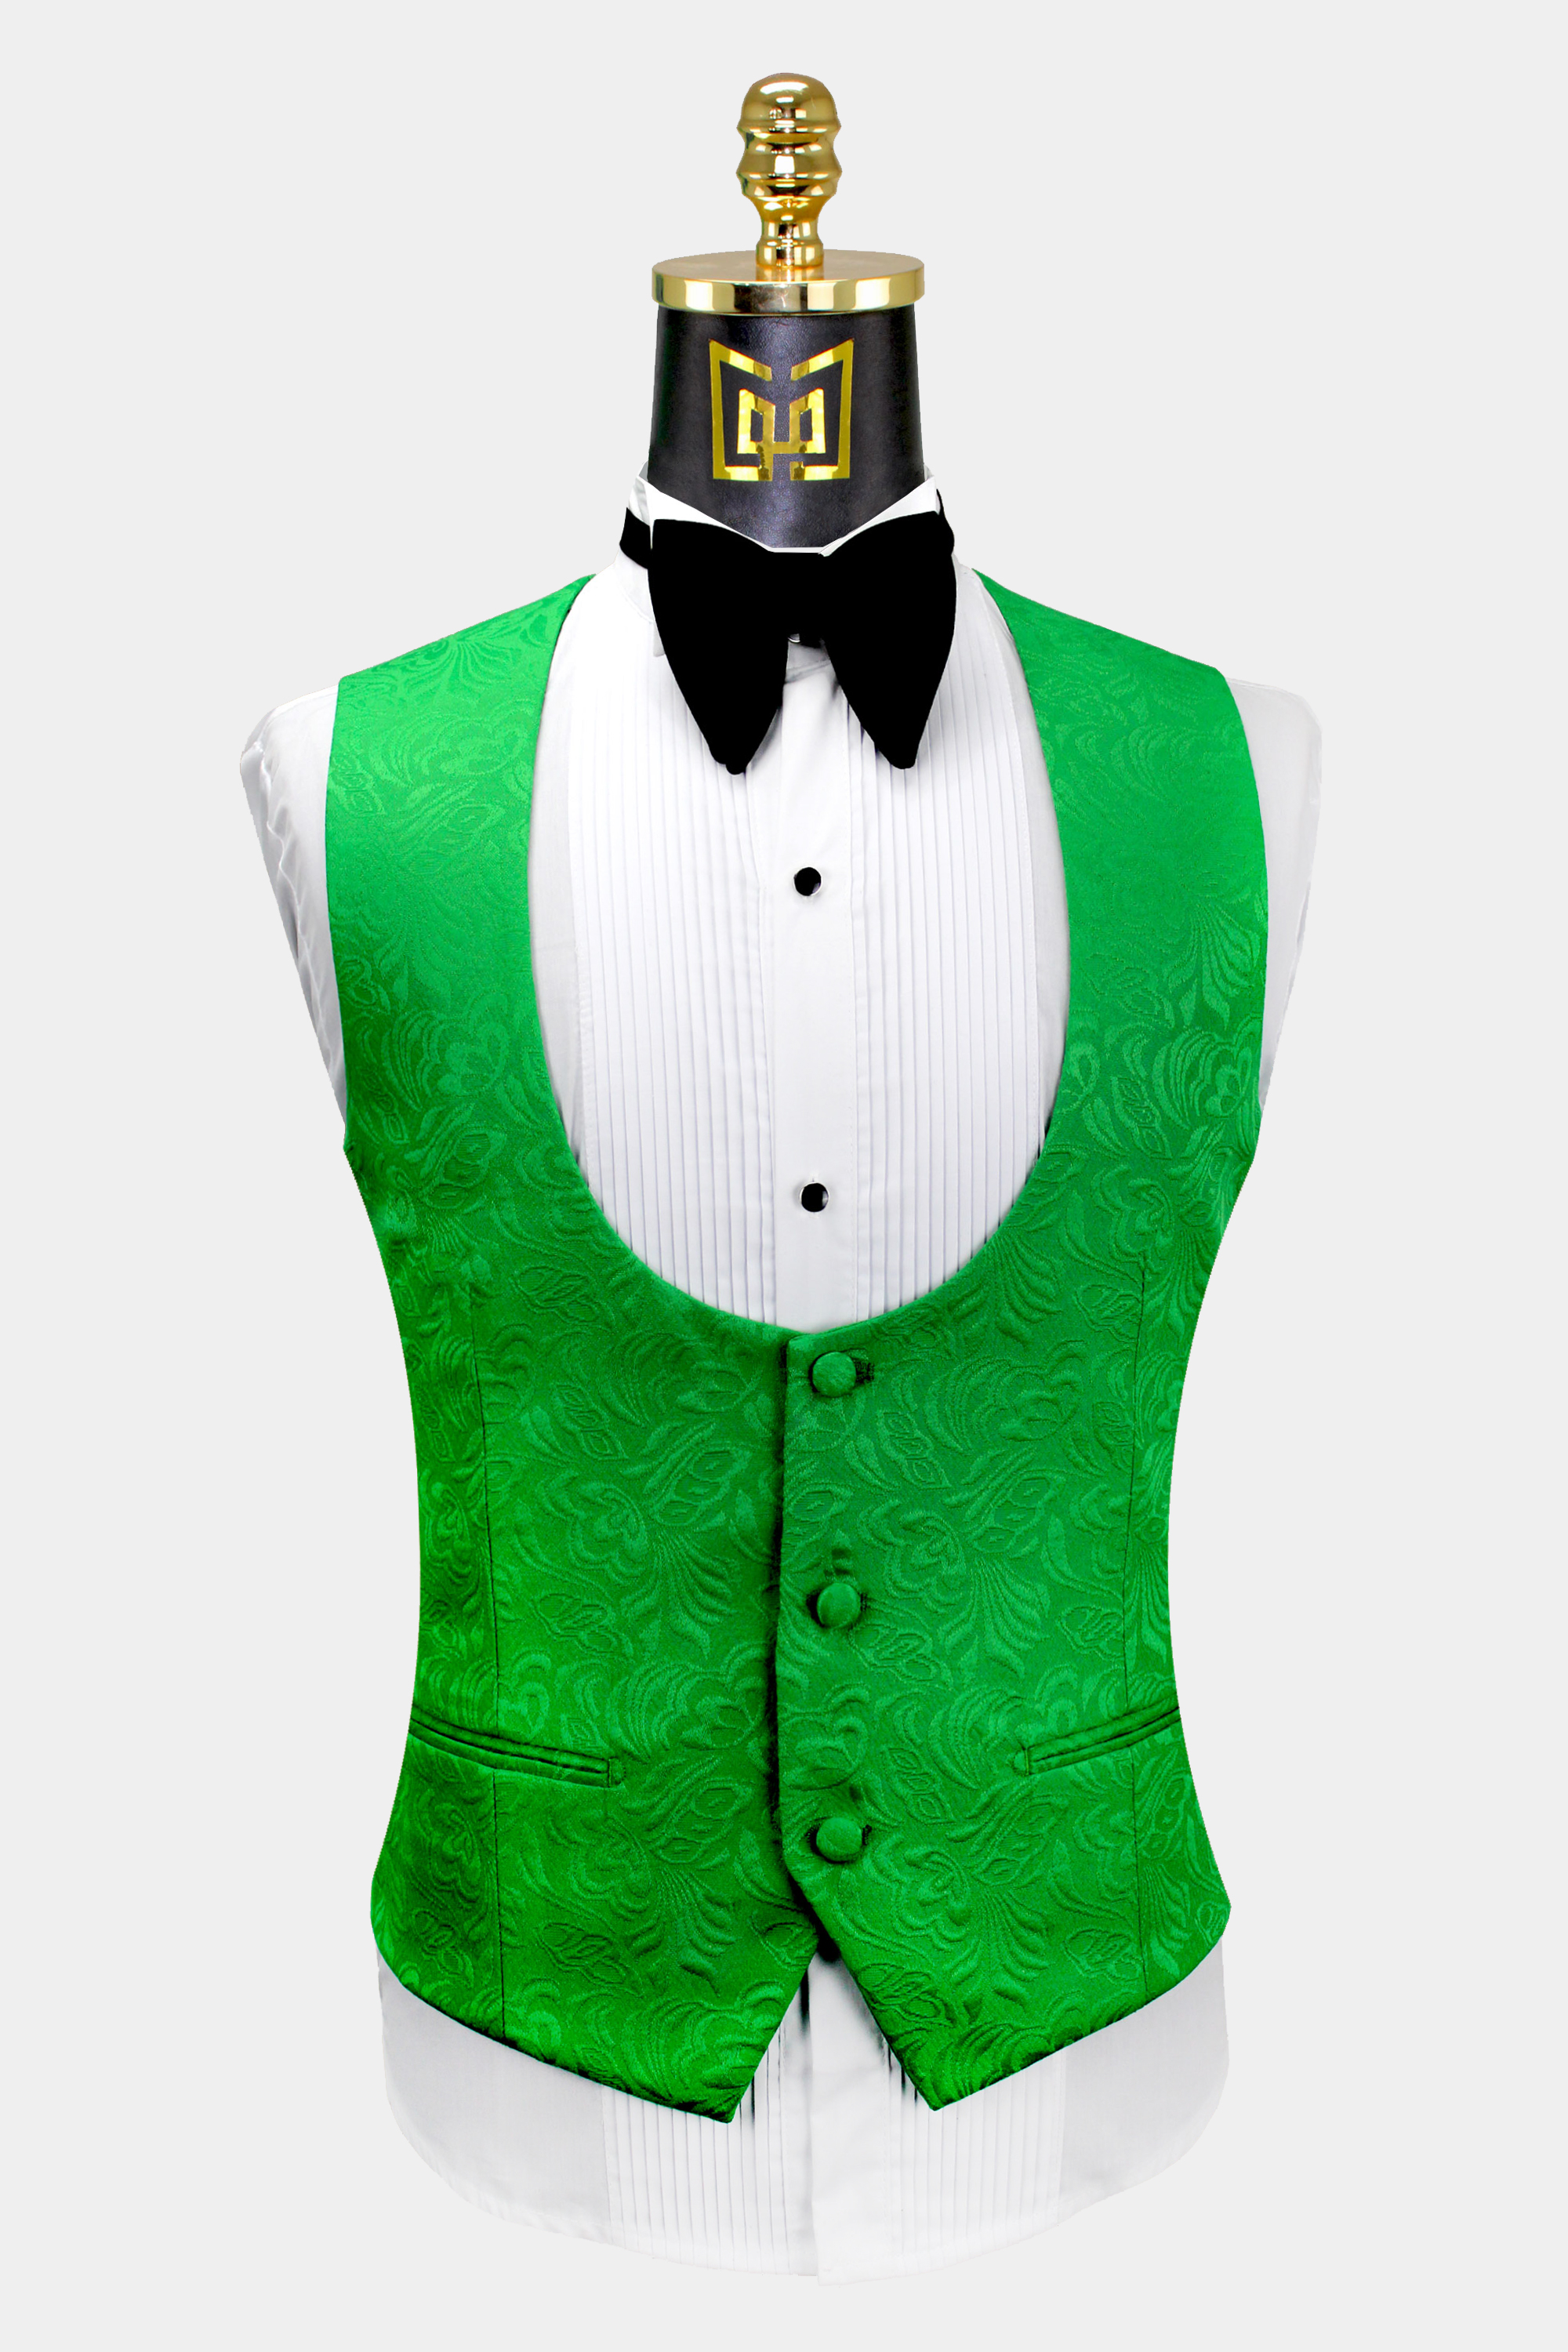 New Men's lime green formal vest Tuxedo Waistcoat_necktie & bowtie set wedding 